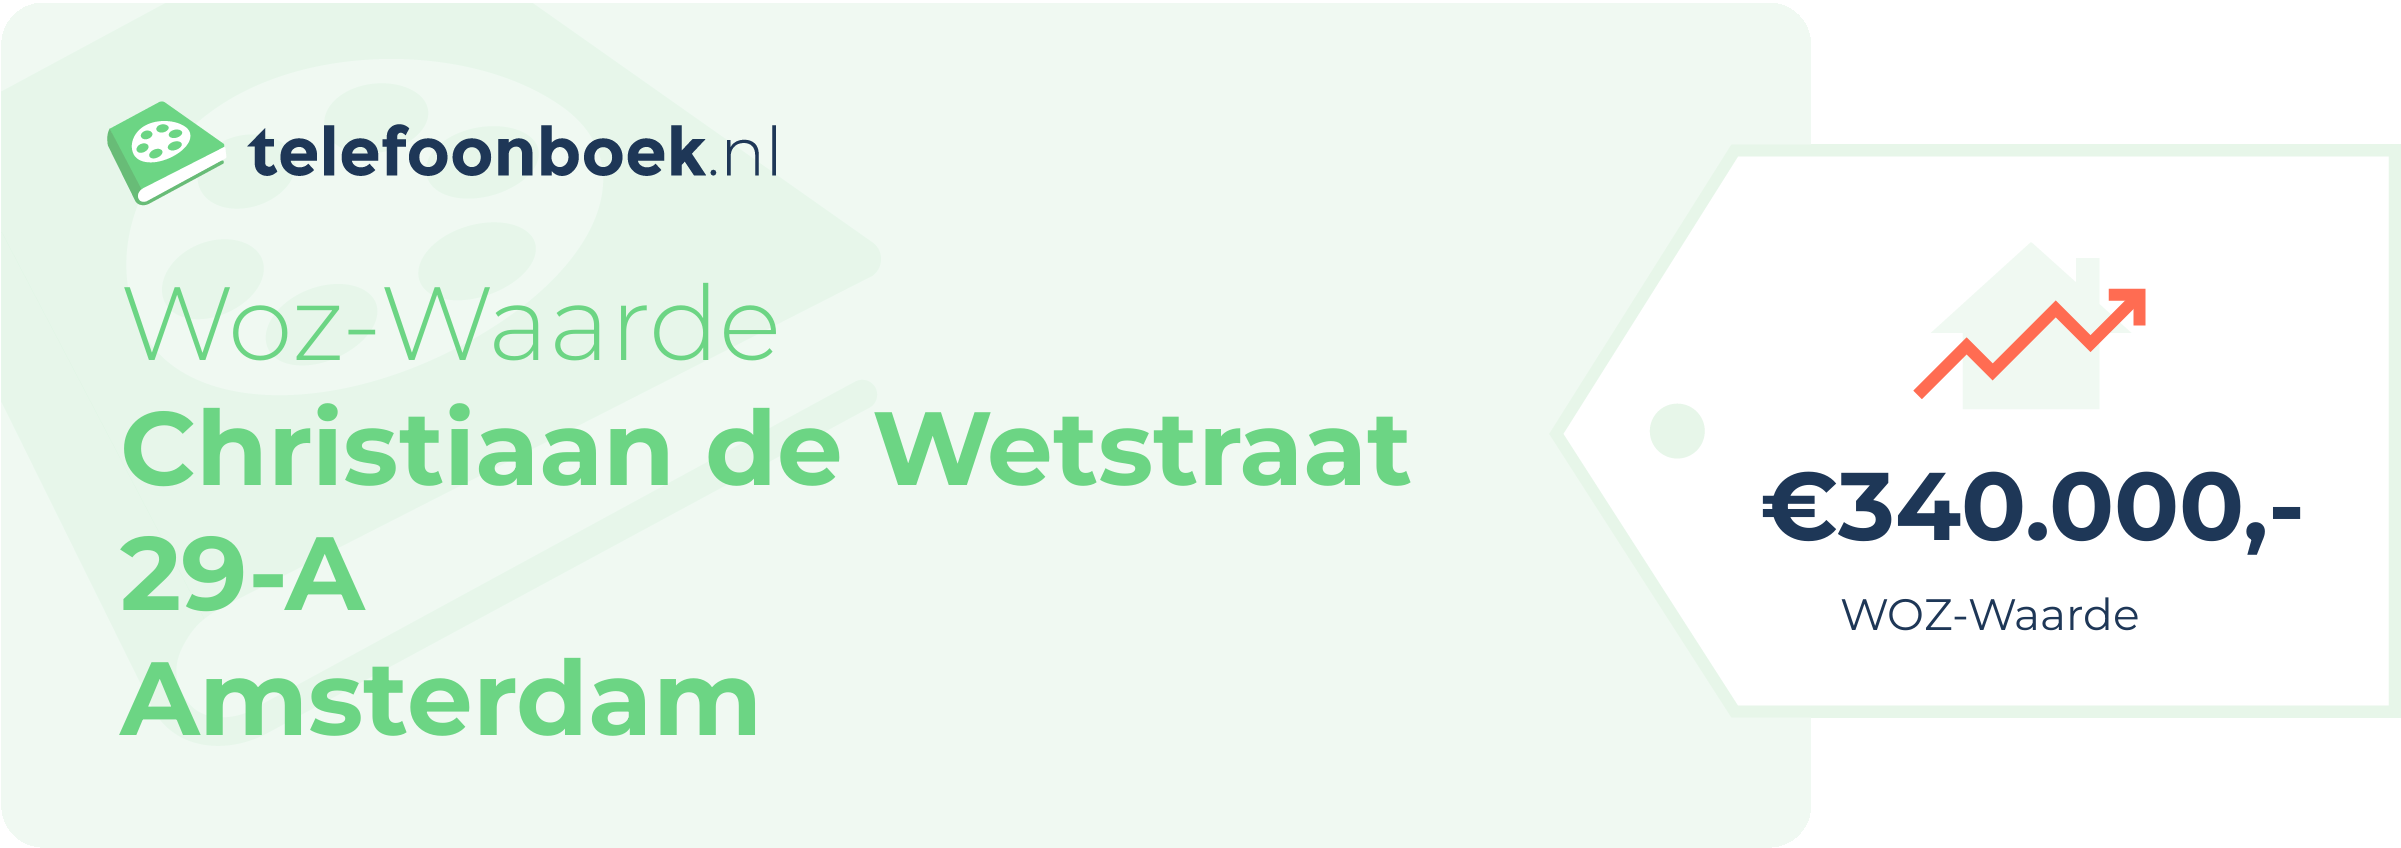 WOZ-waarde Christiaan De Wetstraat 29-A Amsterdam